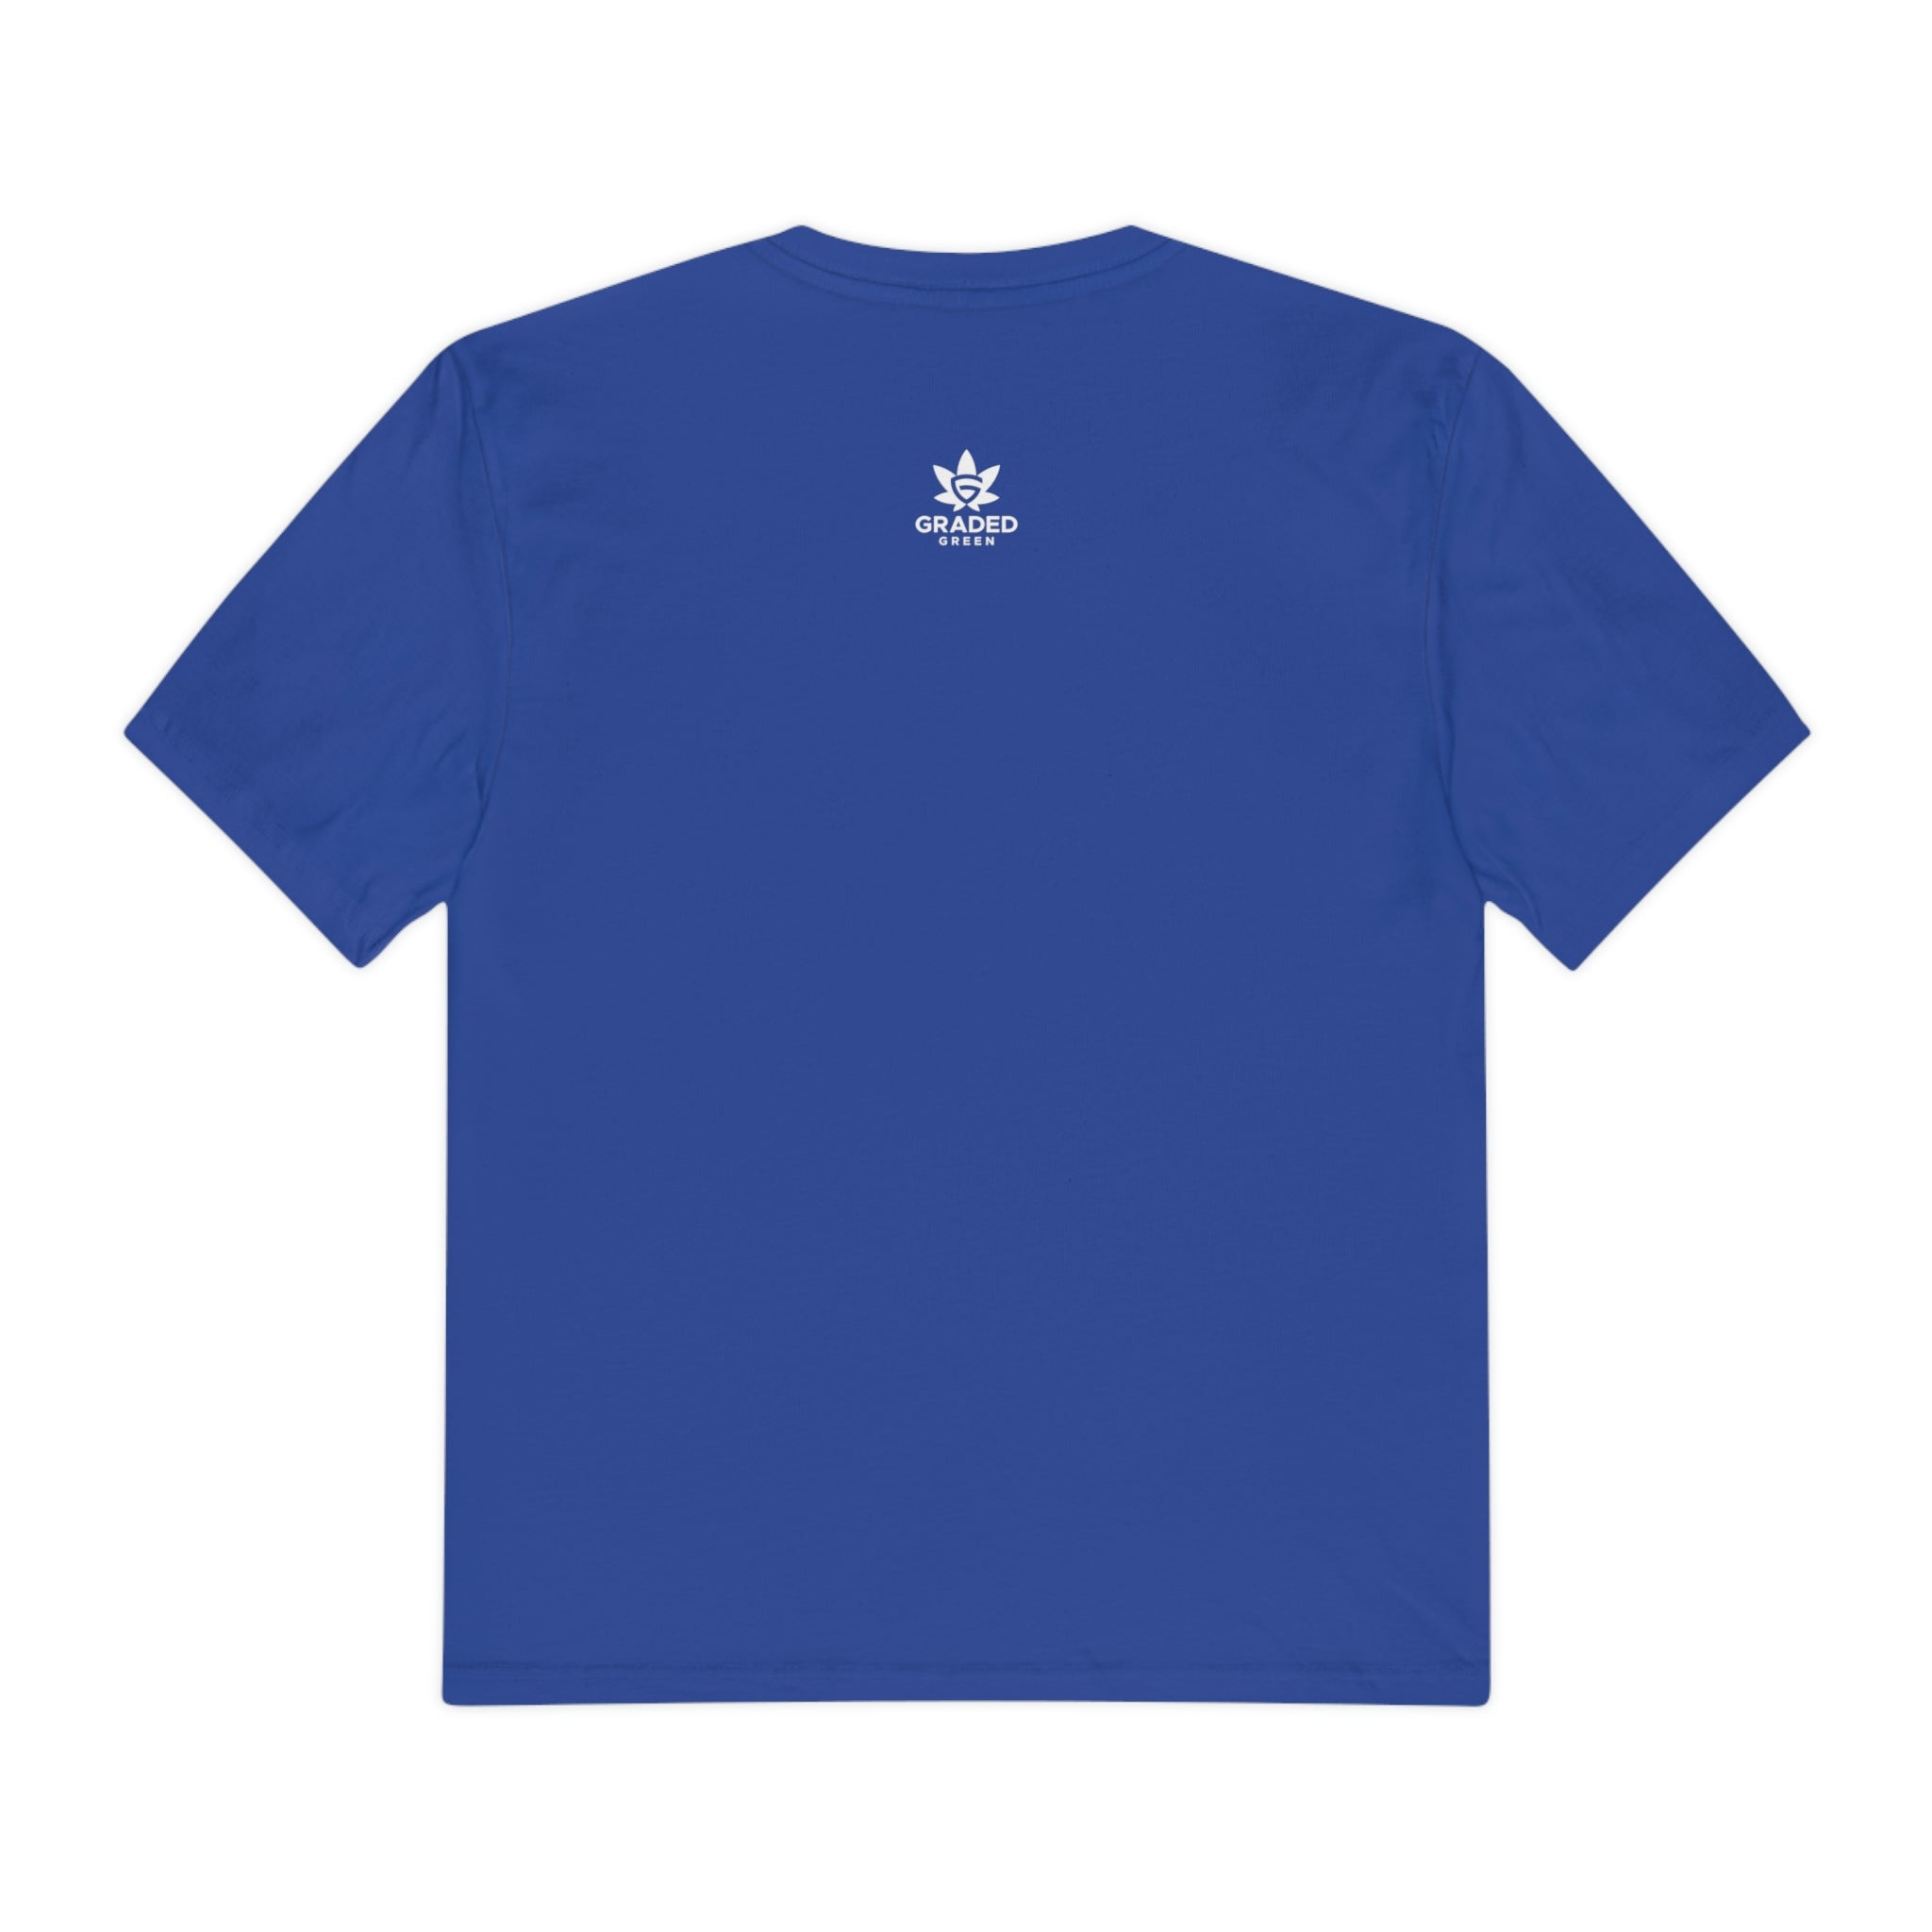 Graded Green Zkittlez Unisex Tee Shirt Cannabis Clothing UK